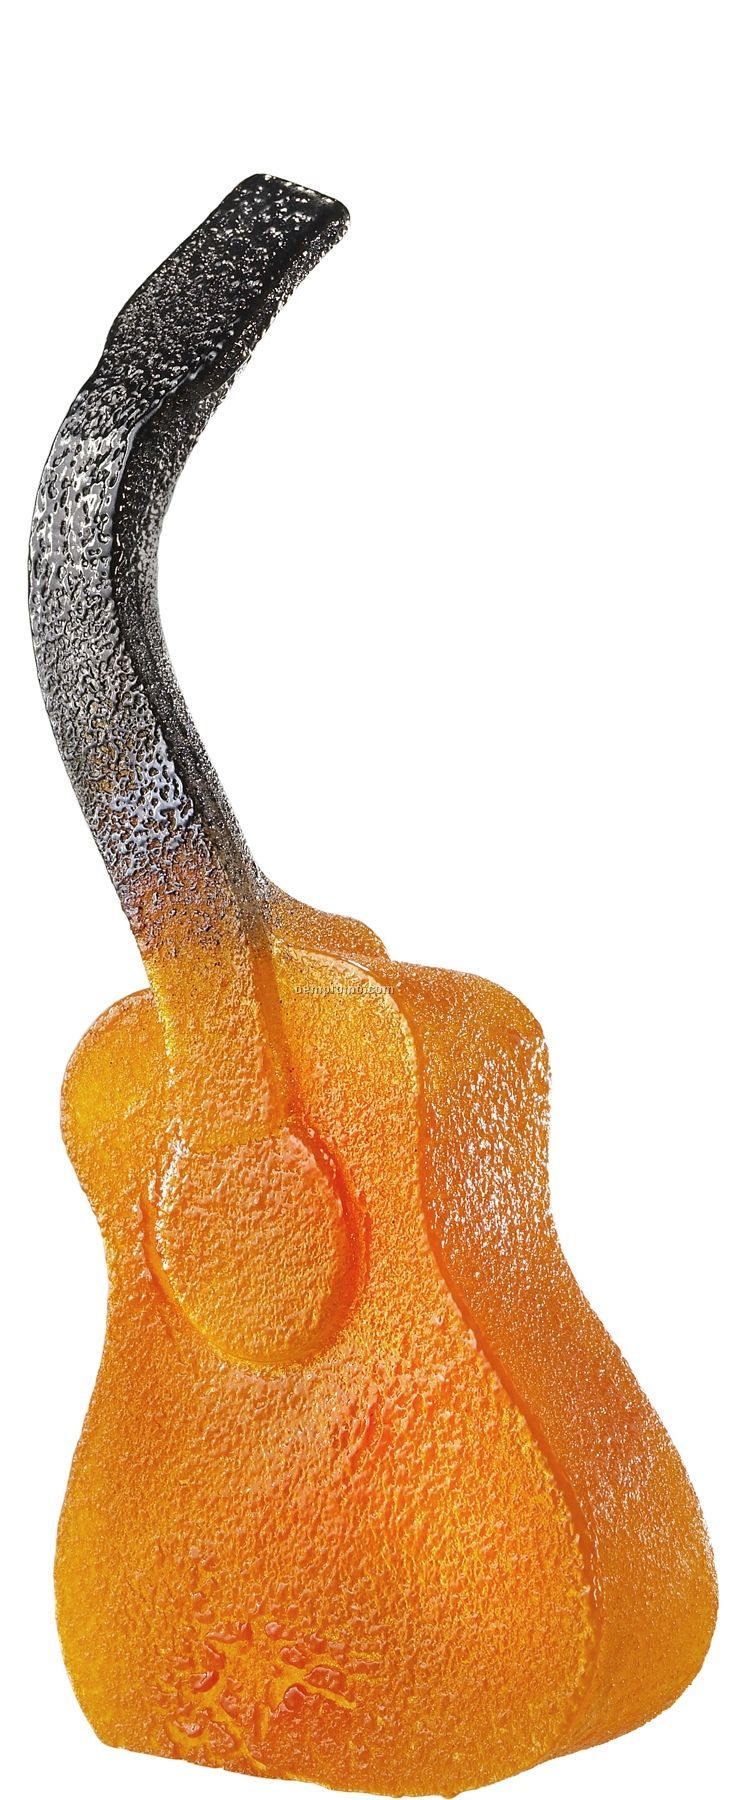 The Band Orange Glass Guitar Sculpture By Kjell Engman